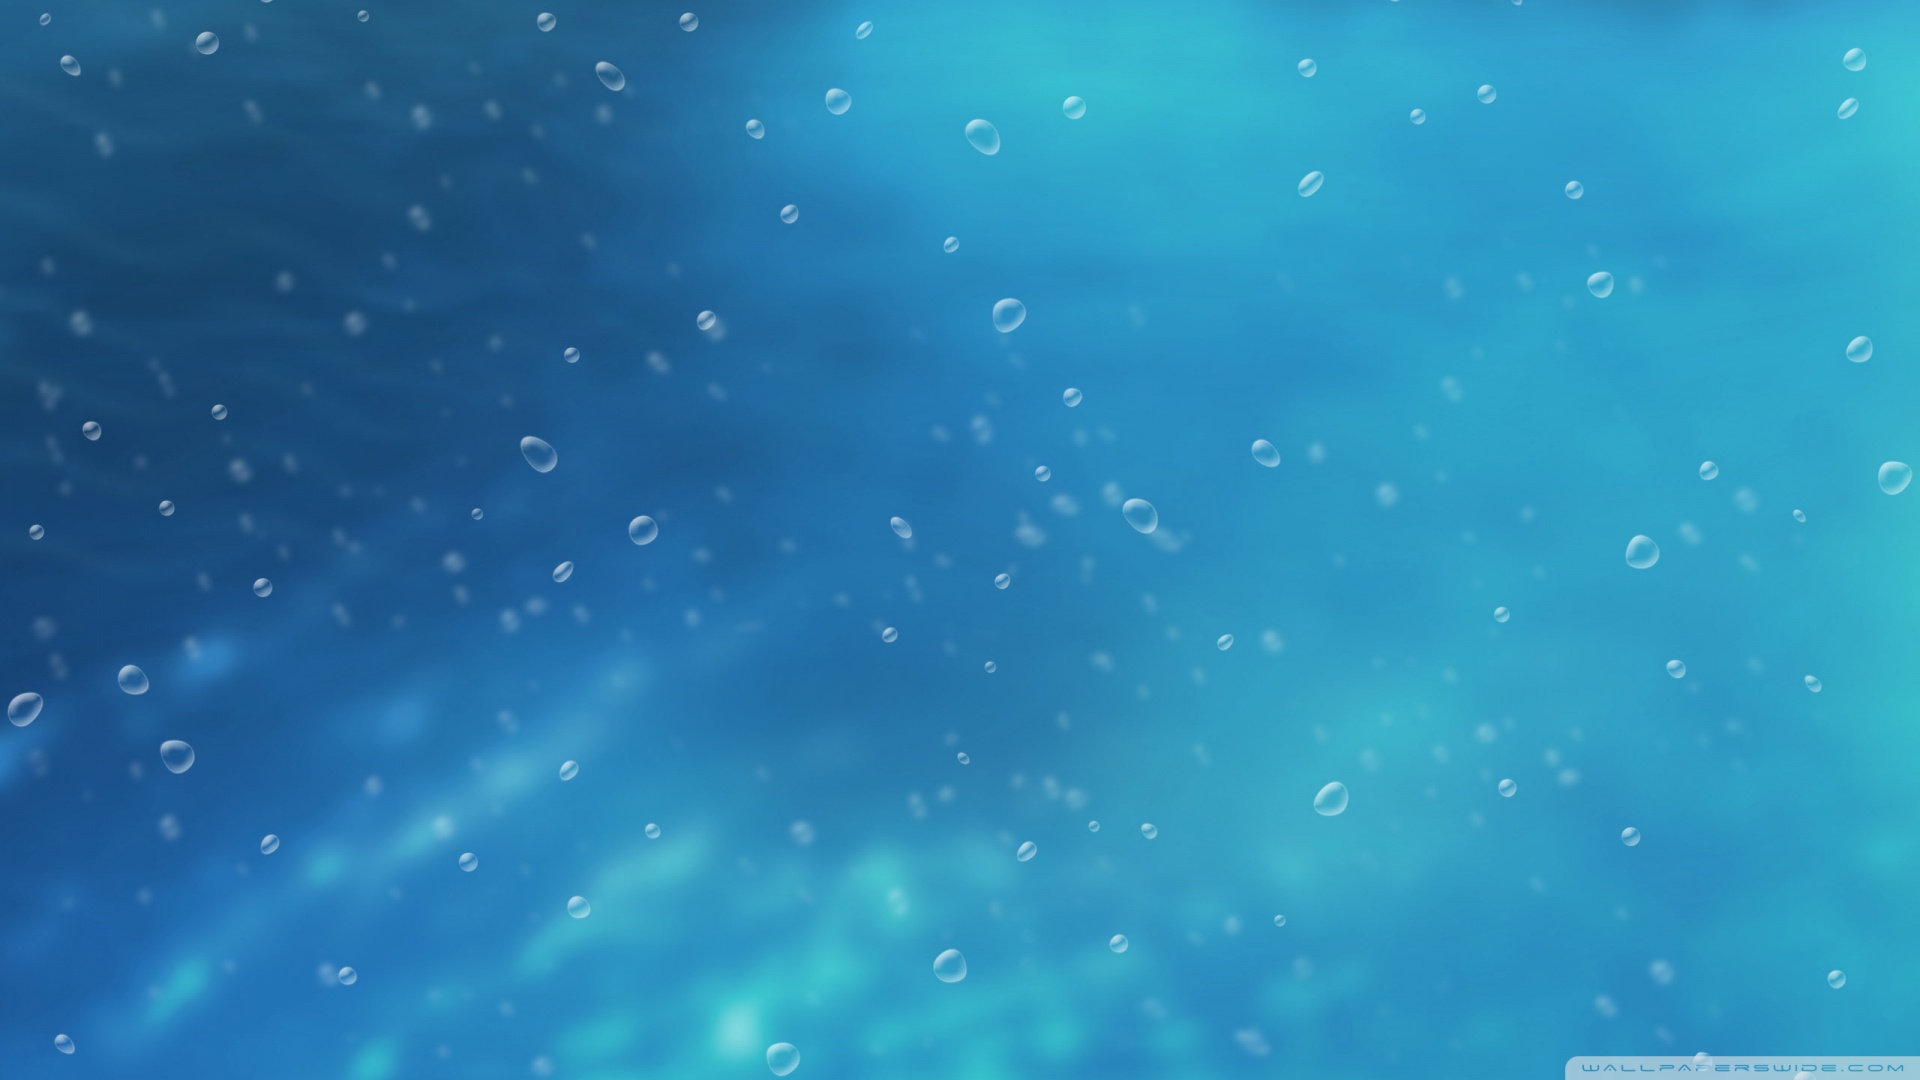 Light Blue Background With Bubbles Wallpaper 1920x1080 Light Blue